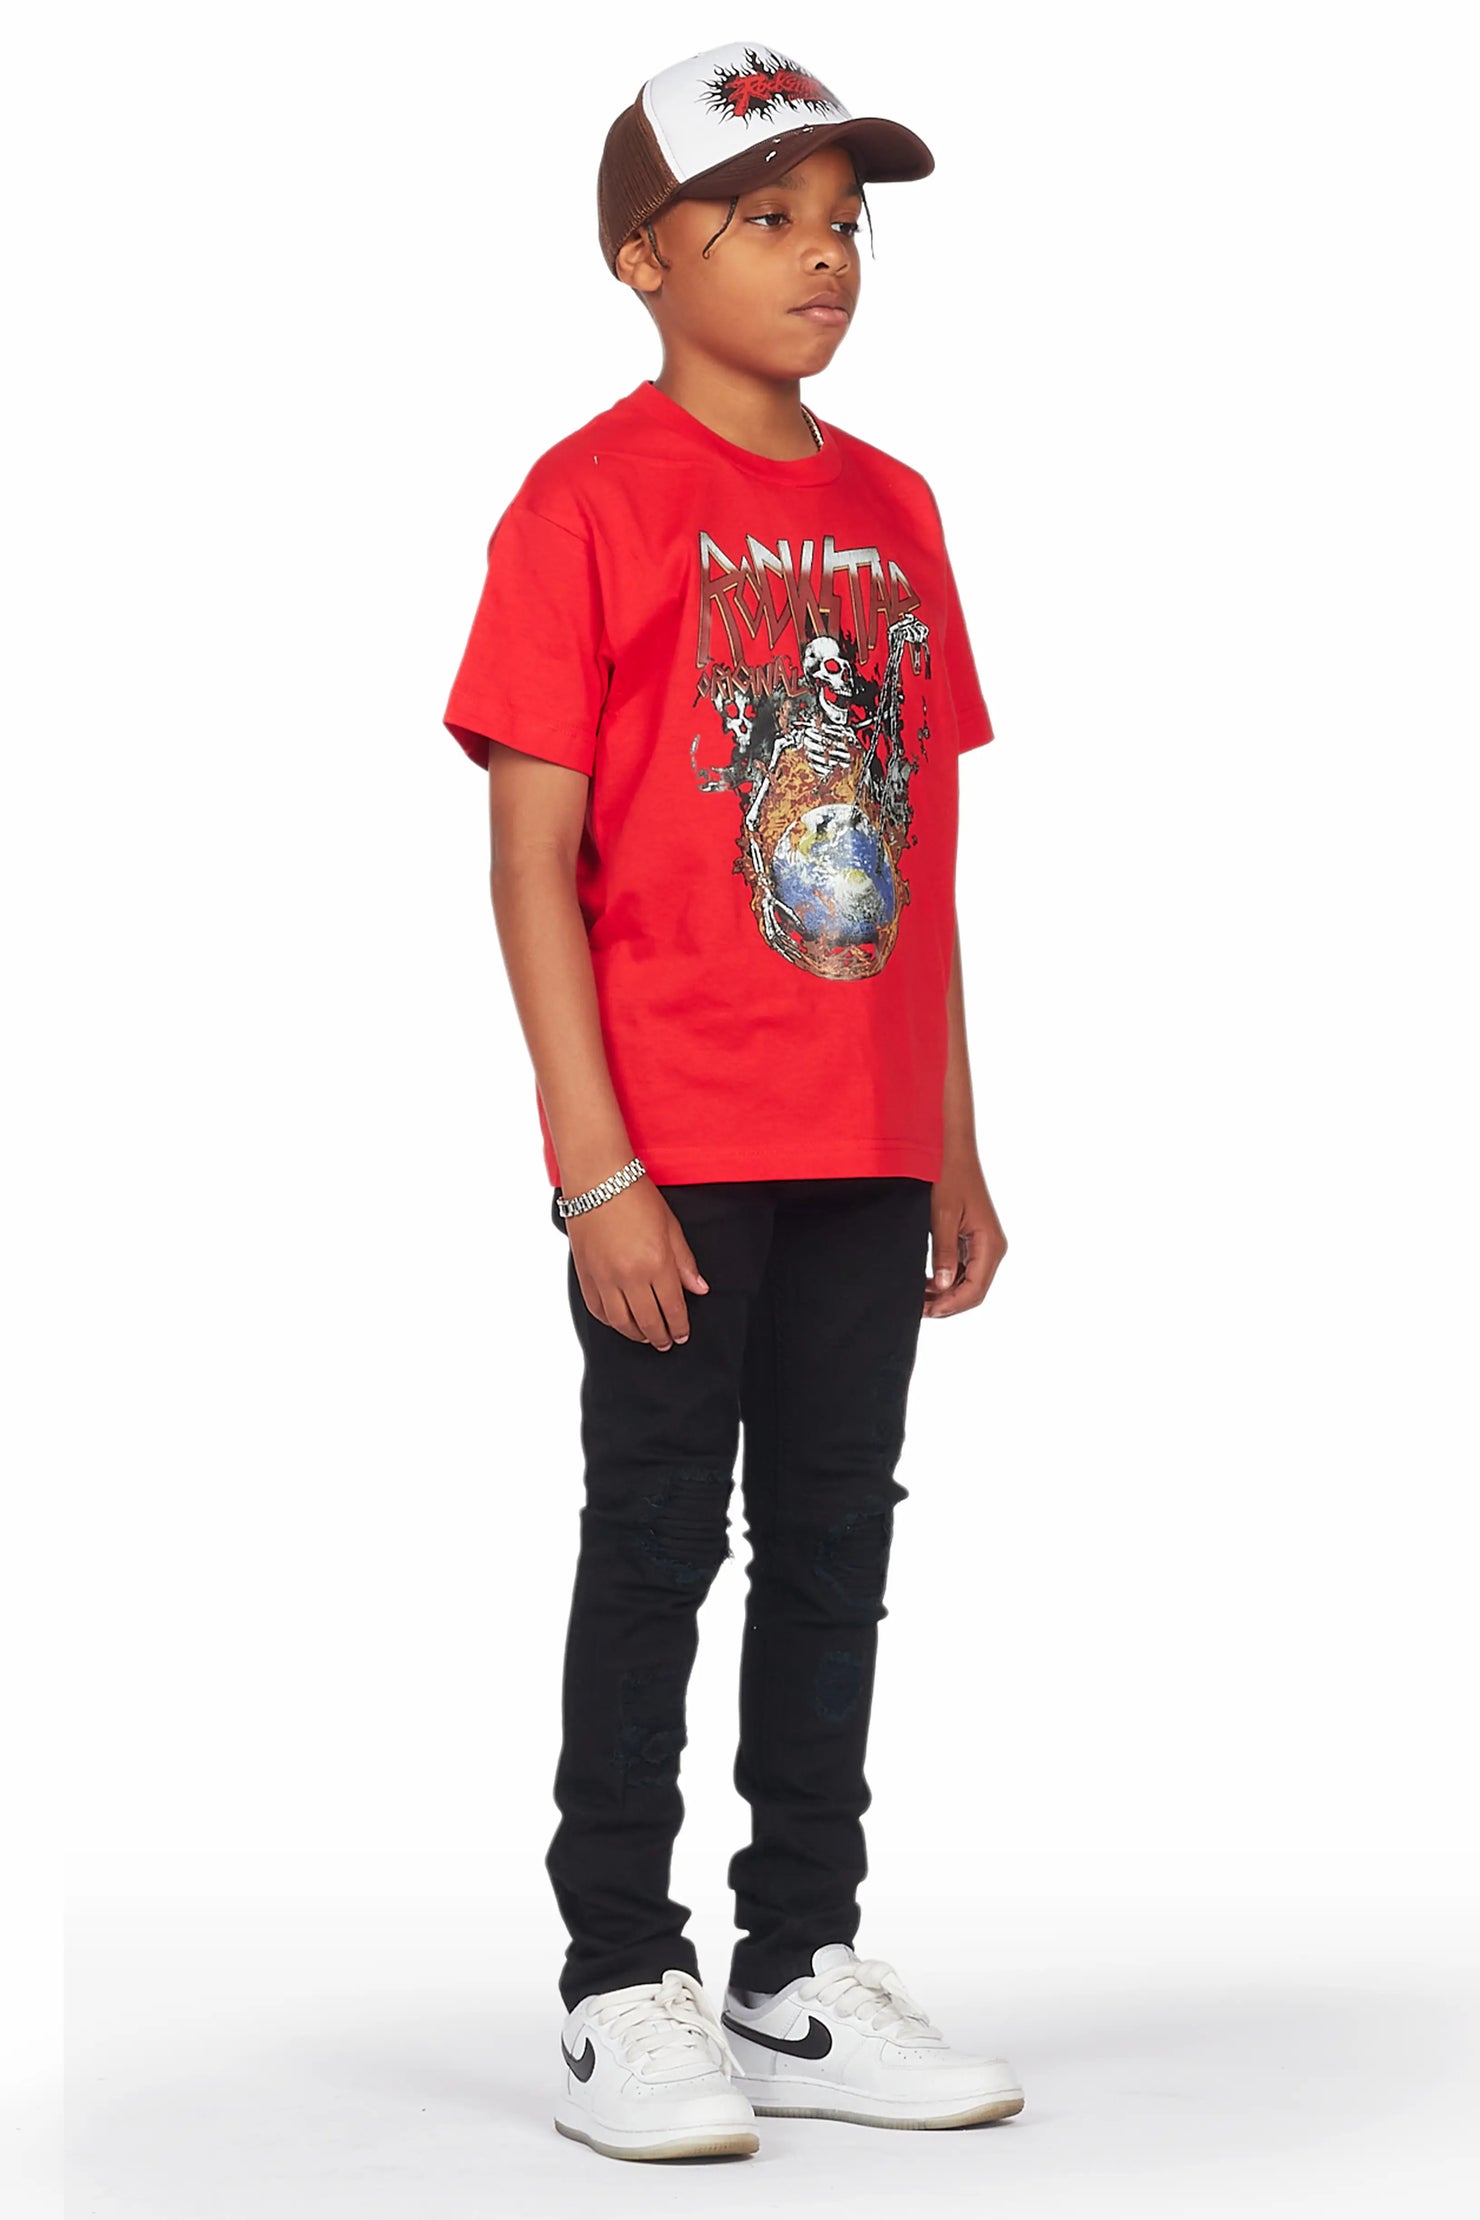 Boys Cachi Red/Black T-Shirt/Skinny Jean Set